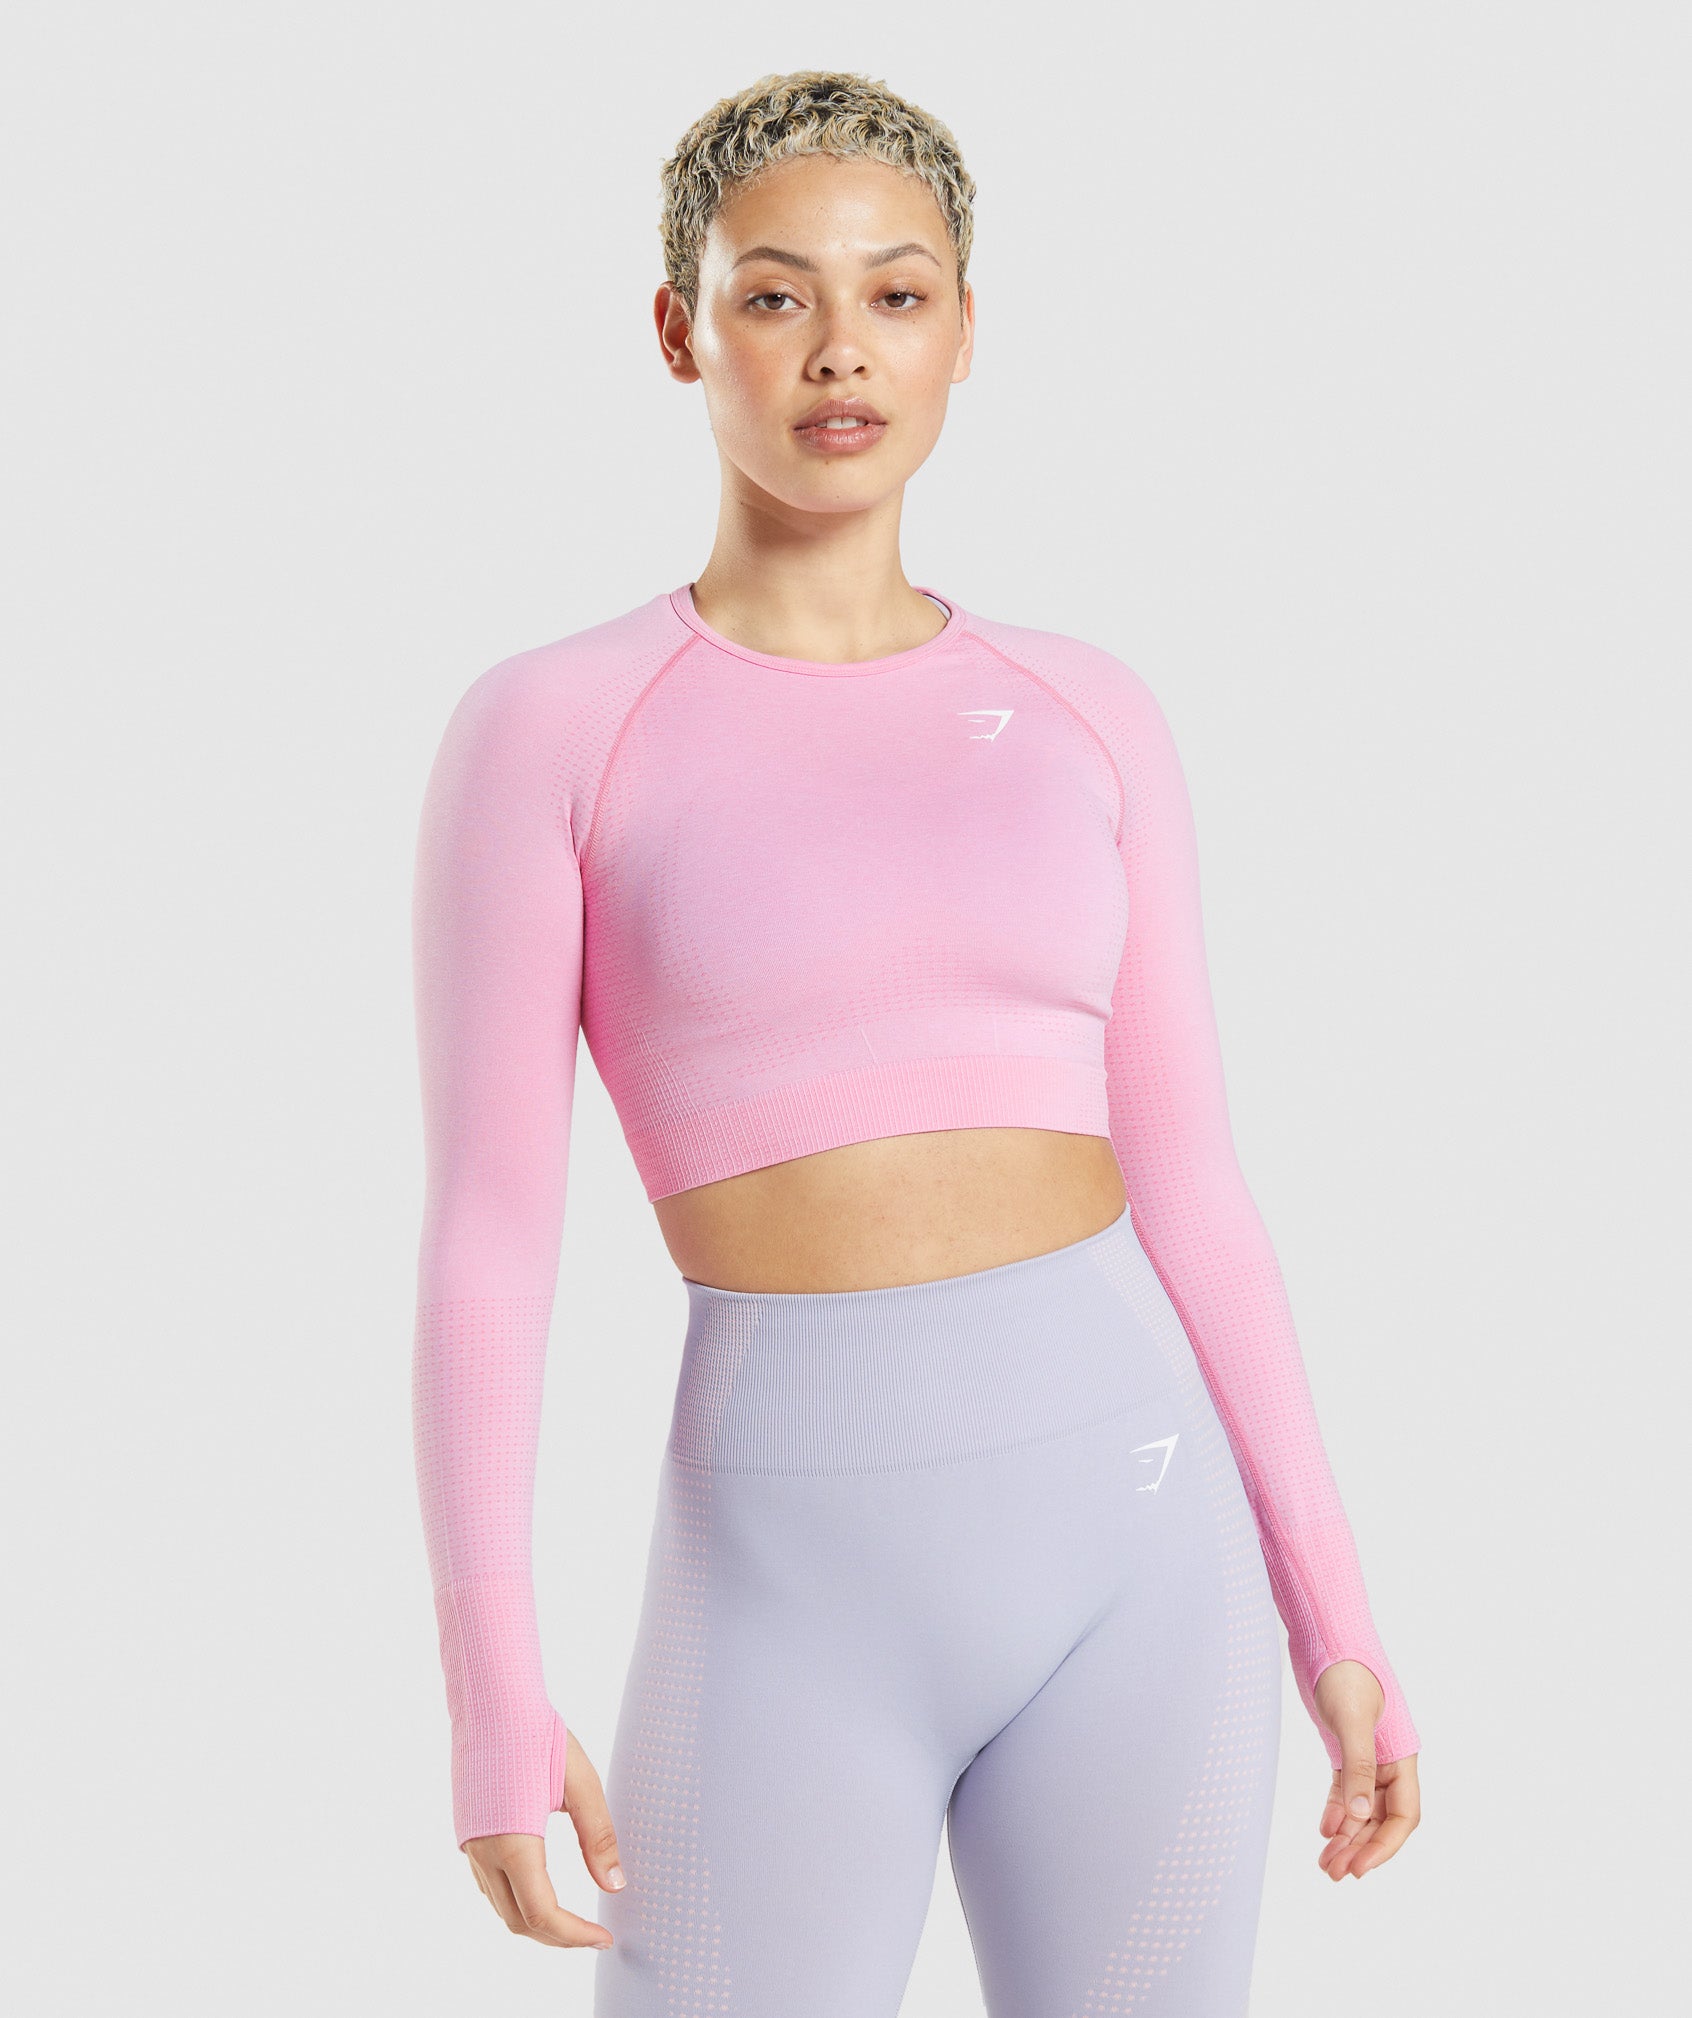 Gymshark Vital Seamless 2.0 Shorts - Sorbet Pink Marl